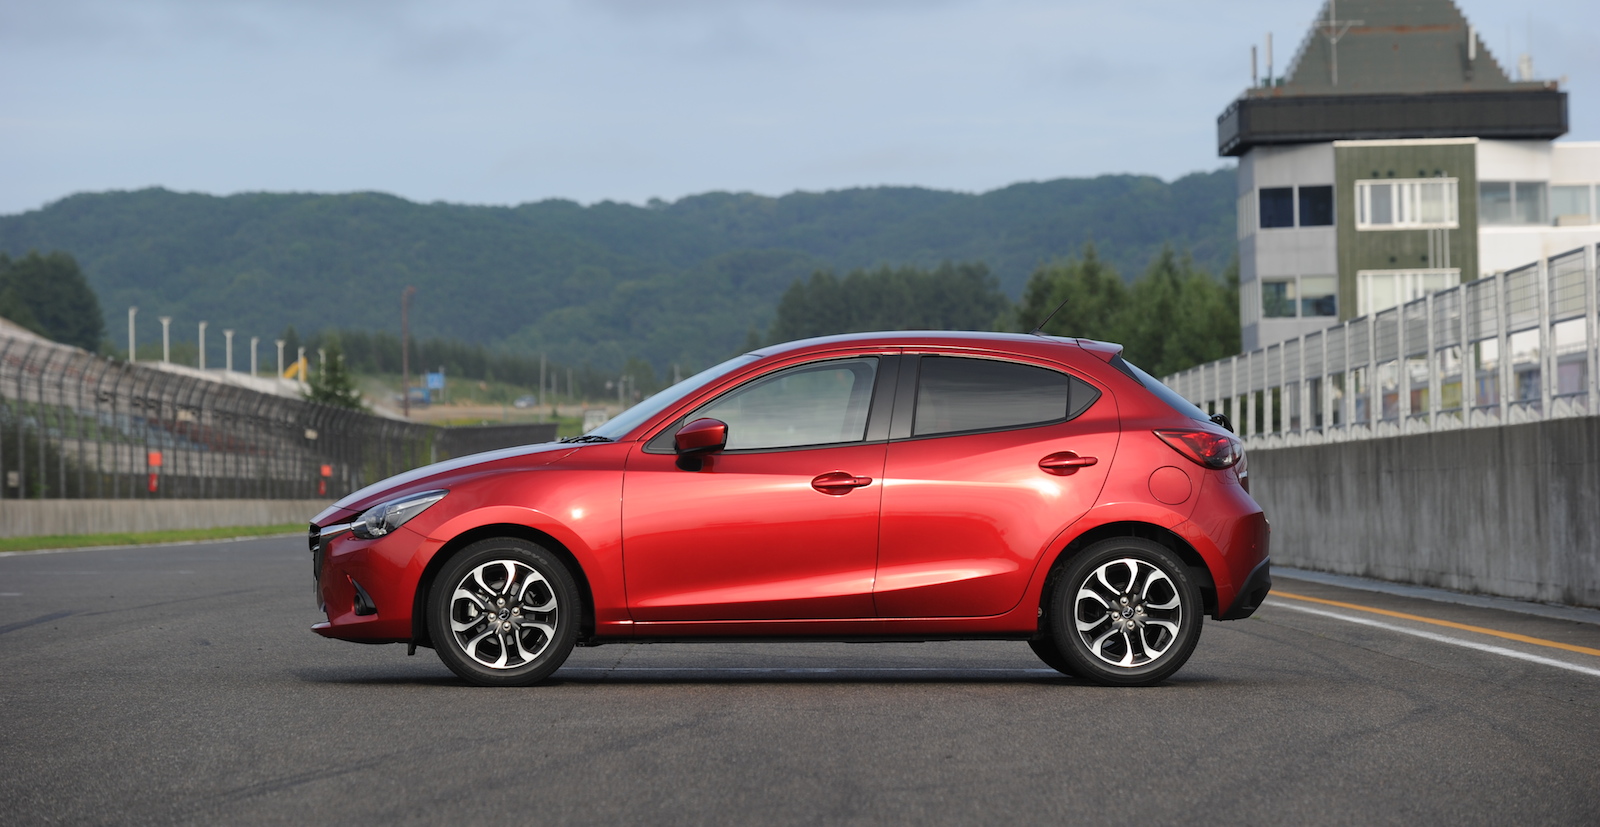 2015 Mazda 2 Review CarAdvice